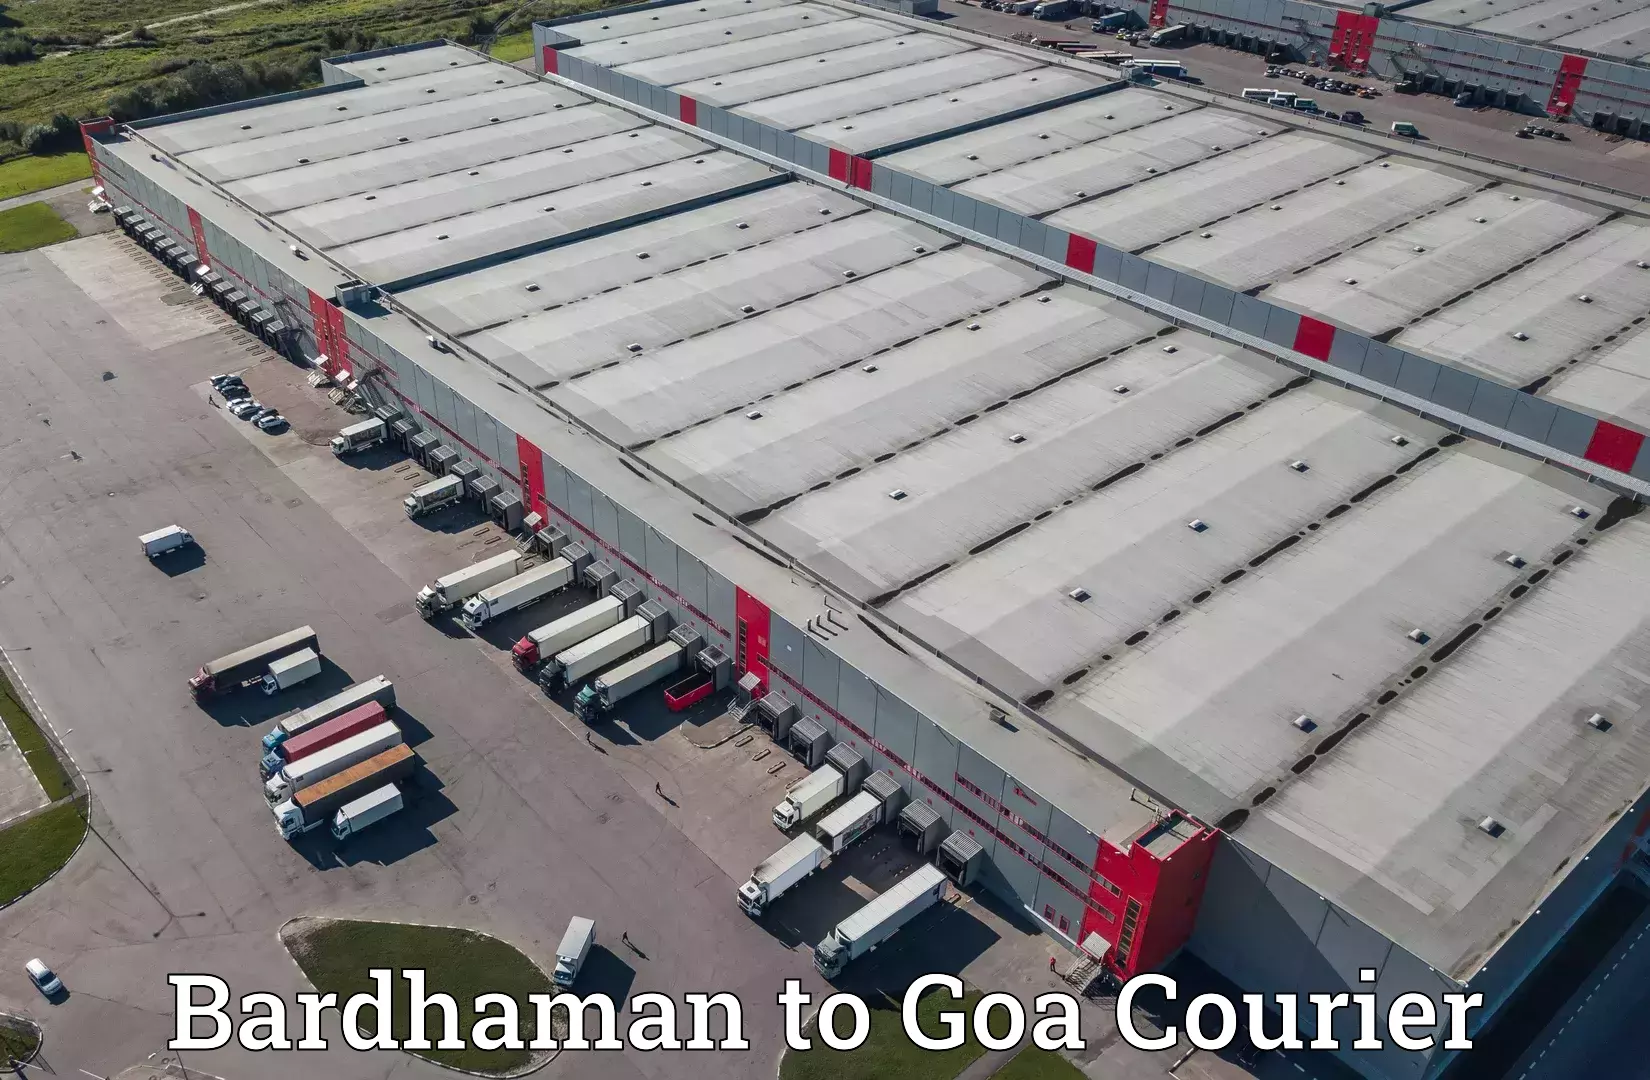 Courier service comparison Bardhaman to Goa